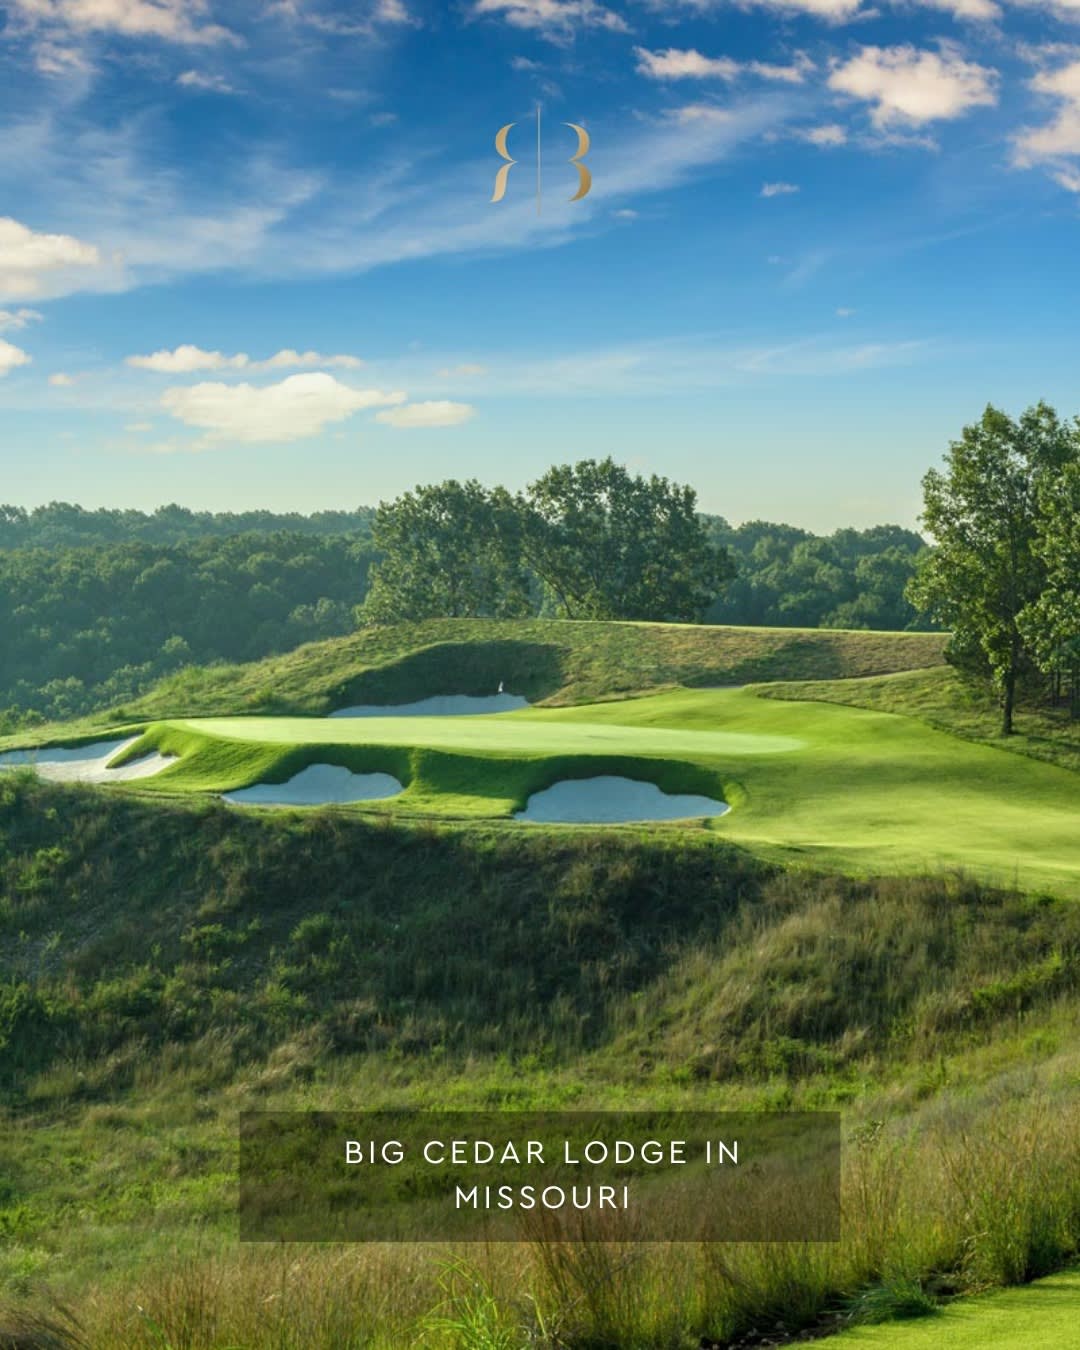 The Best Golf Resorts in the U.S.